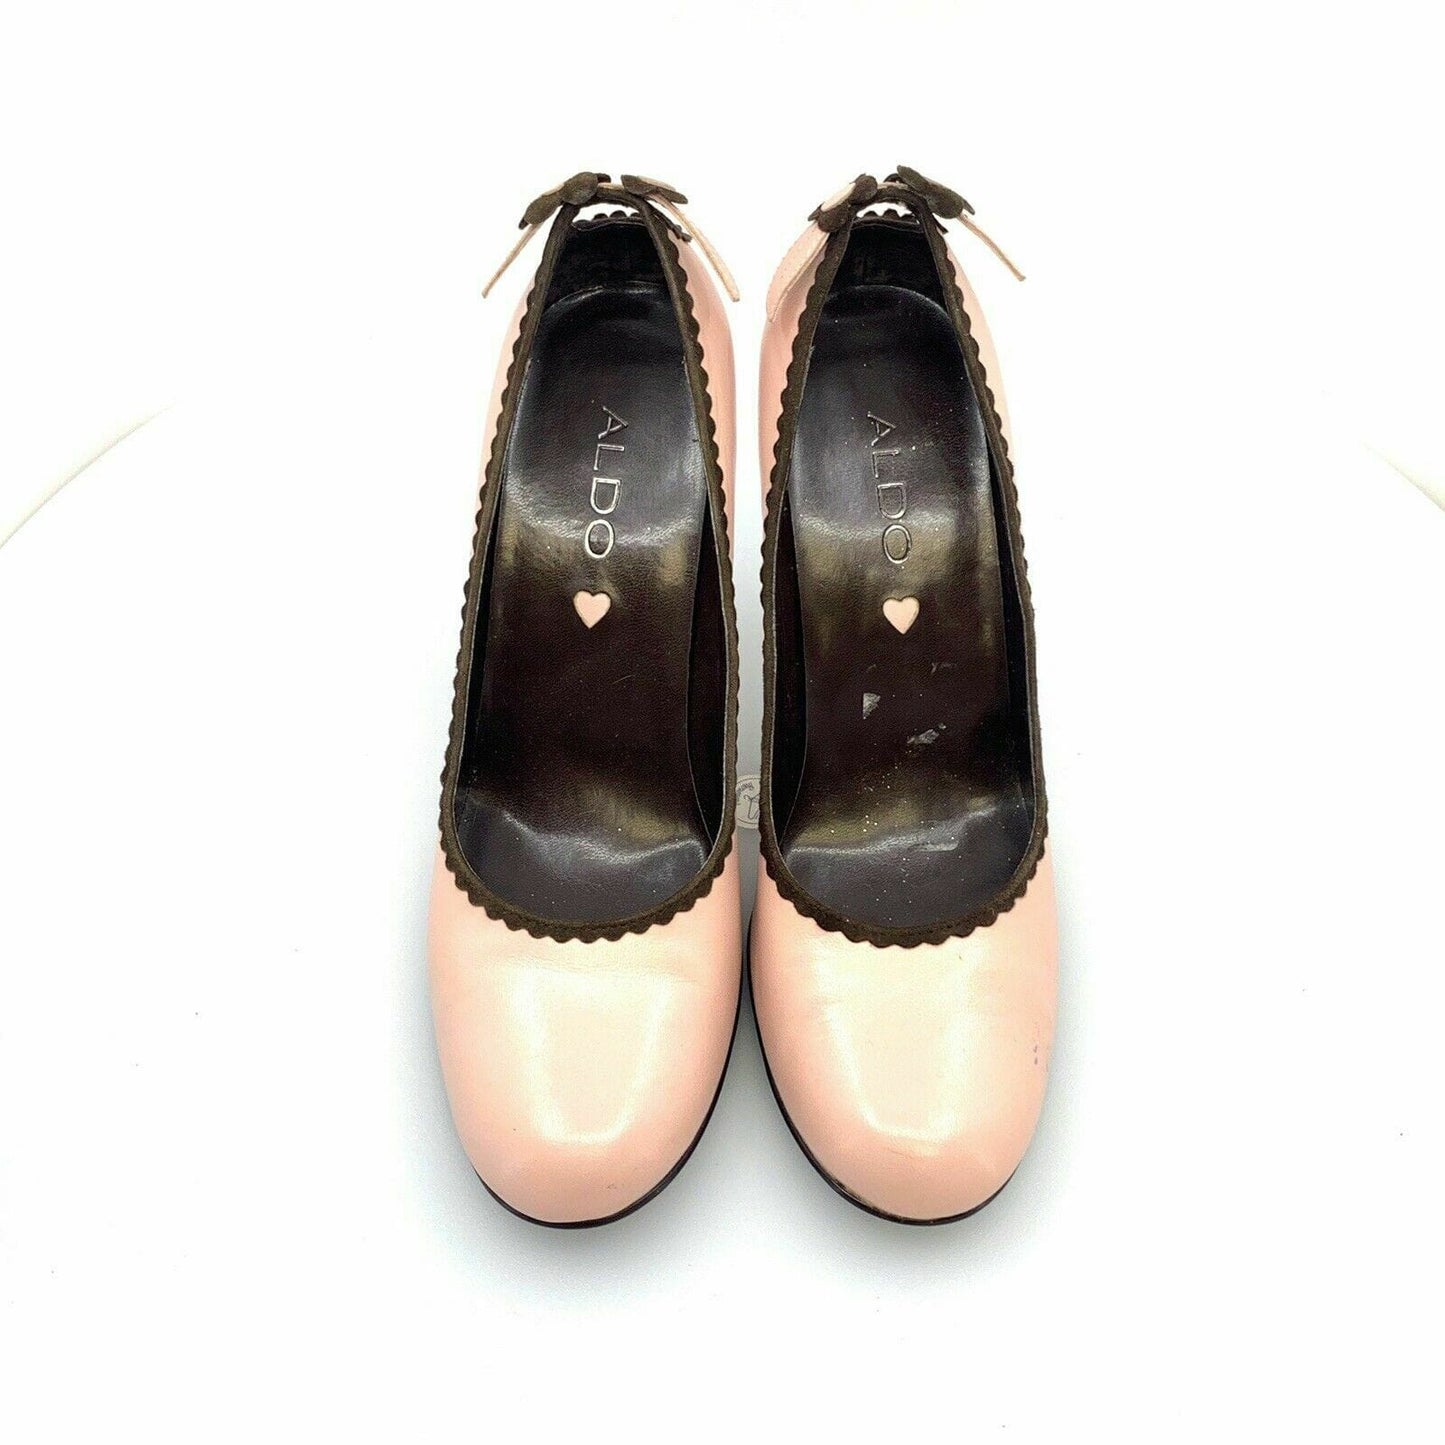 Aldo Womens Round Toe Spool Heel Cutout Flower Pumps, Pink / Brown - Size 6.5